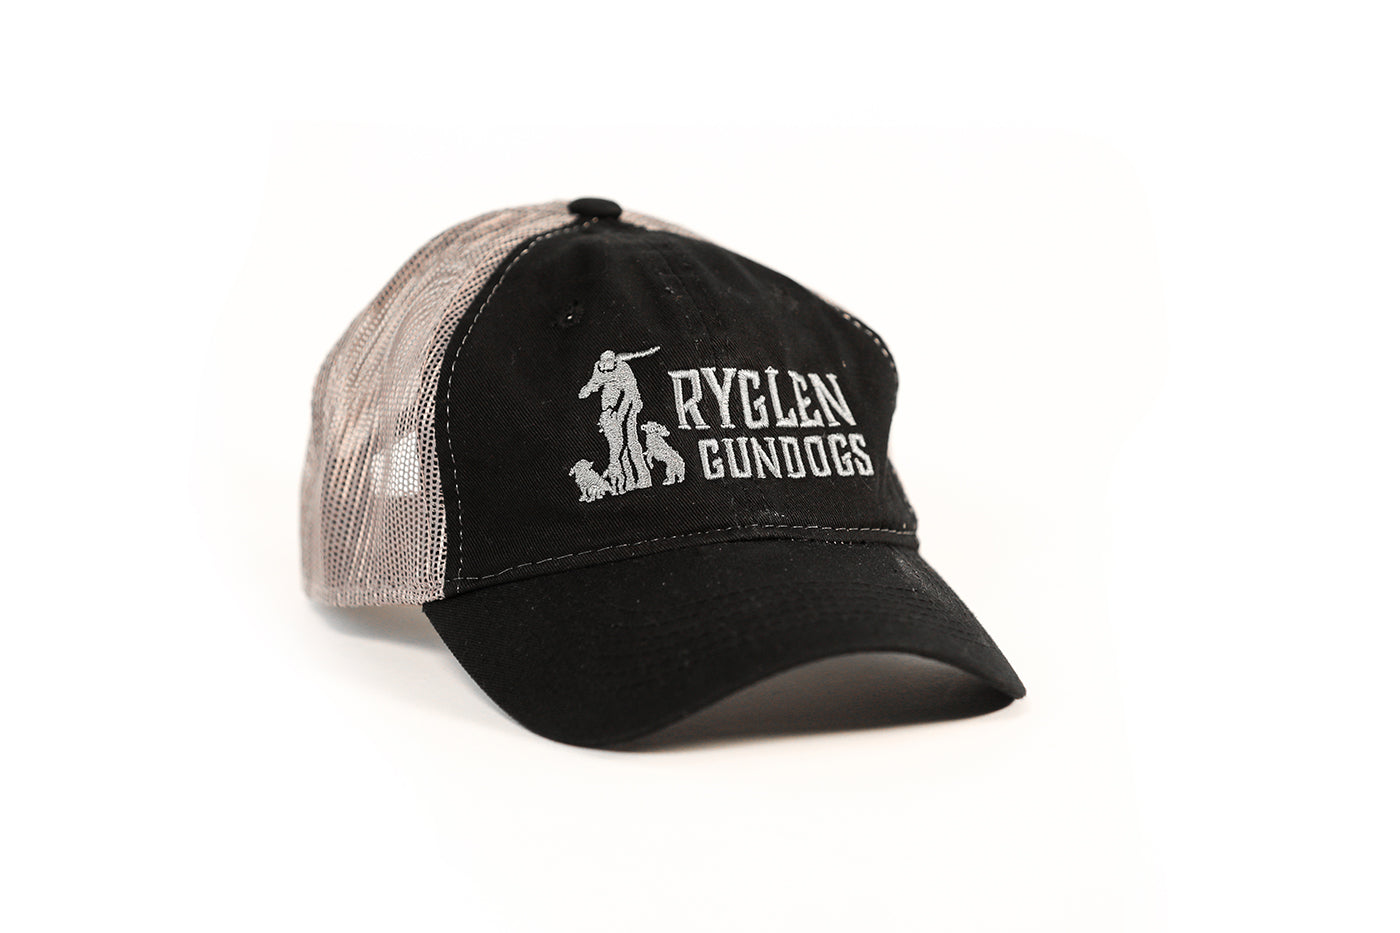 Ryglen Hat - Platinum style - Ryglen Gundogs